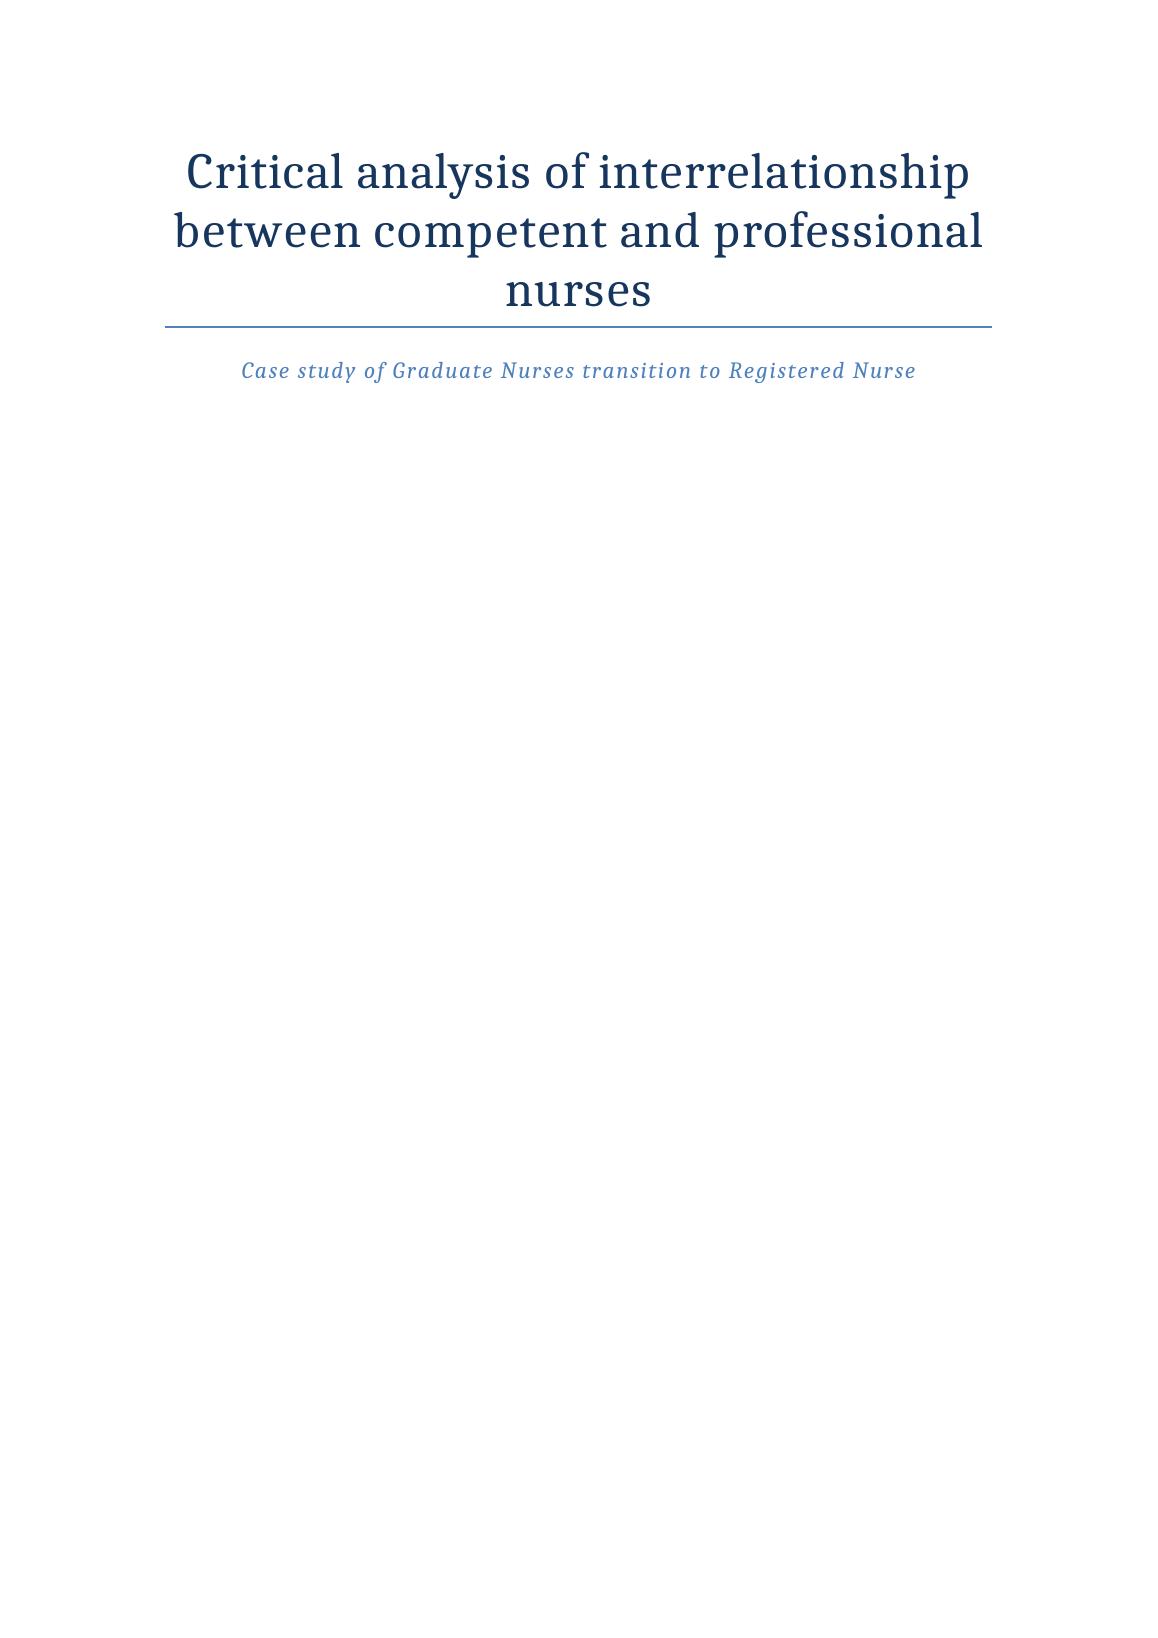 Interrelationship between Competent and Professional Nurses: Case Study of Graduate Nurses Transition to Registered Nurse_1